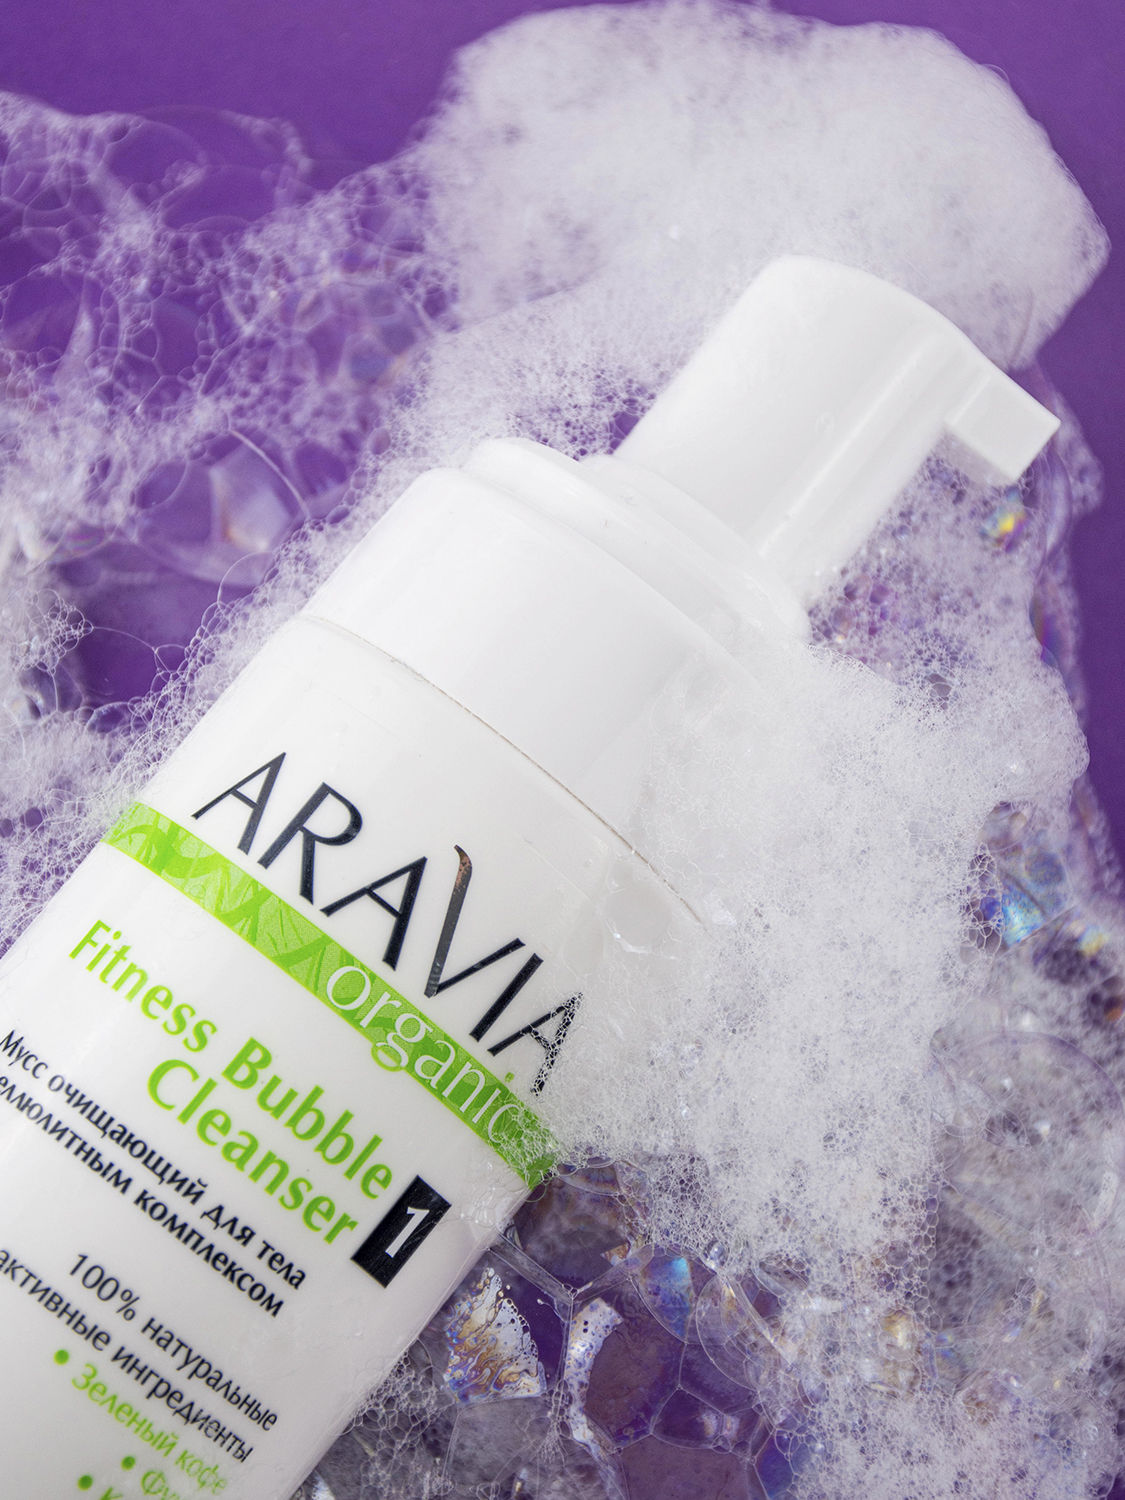 ARAVIA Organic Мусс очищающий для тела с антицеллюлитным комплексом Fitness Bubble Cleanser, 160 мл